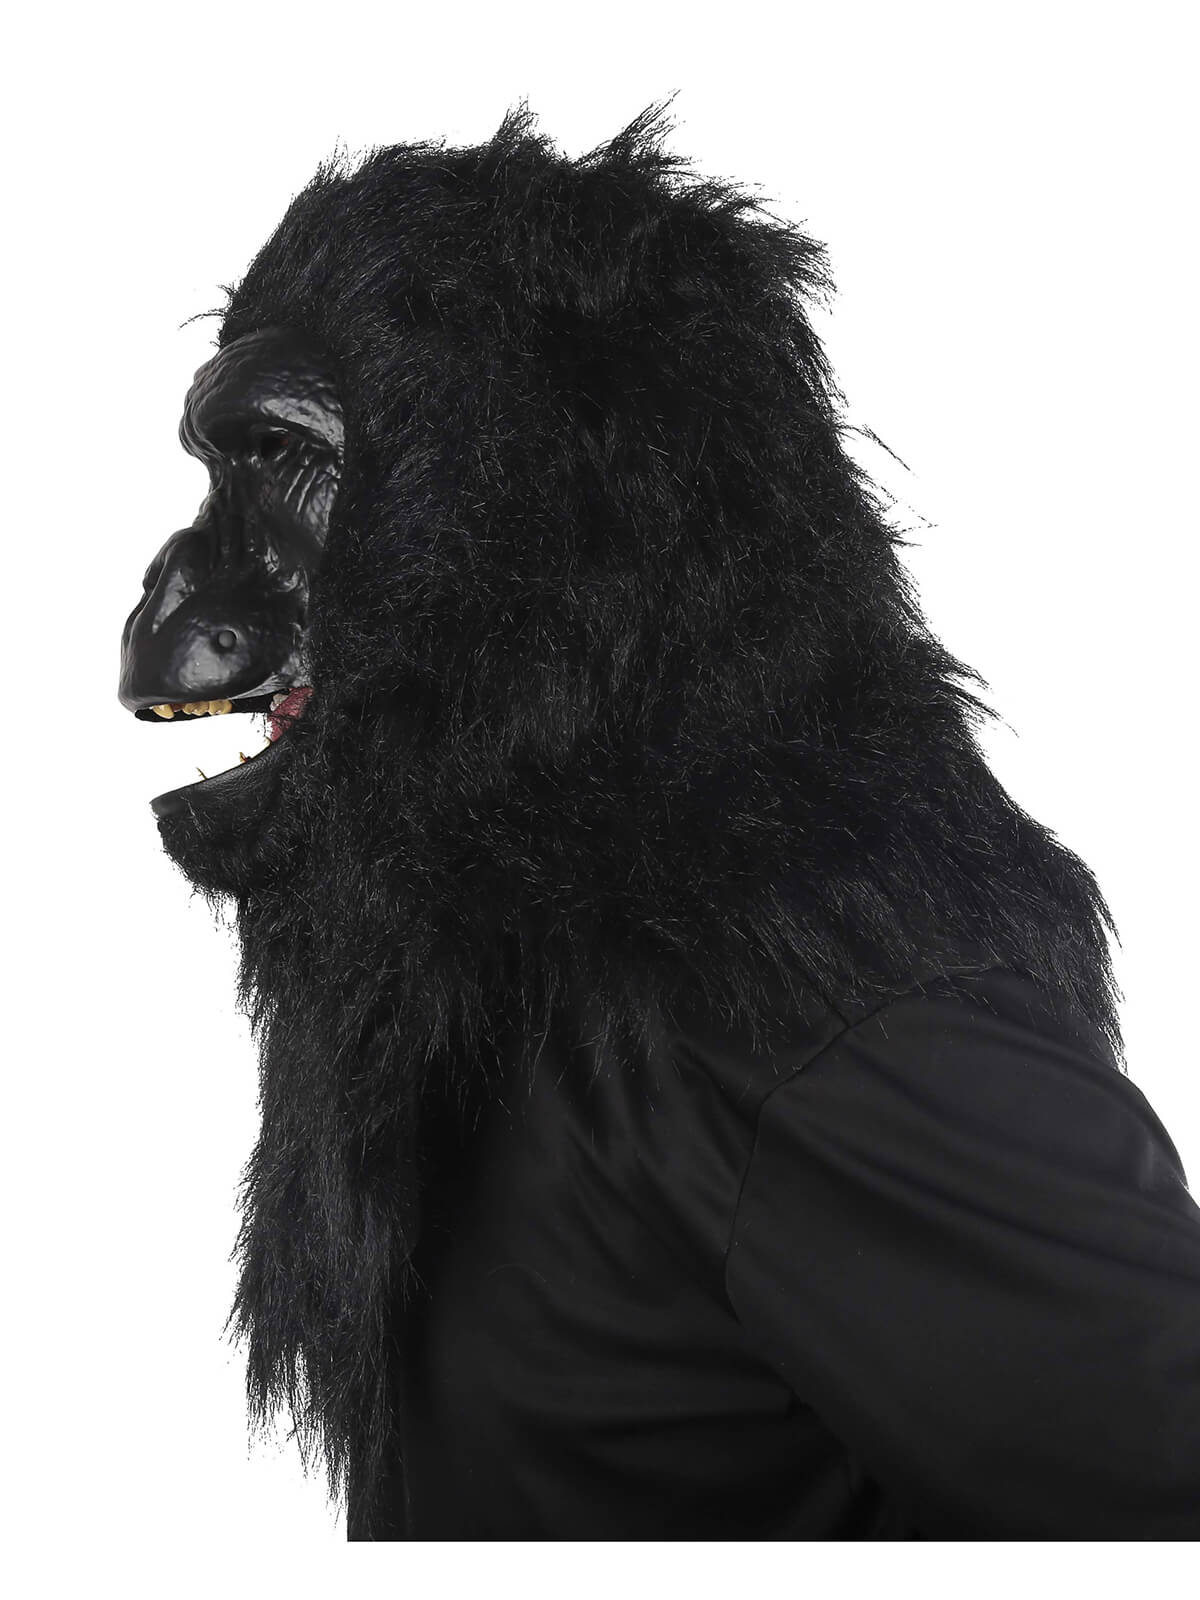 Gorilla Mask w/Moving Mouth